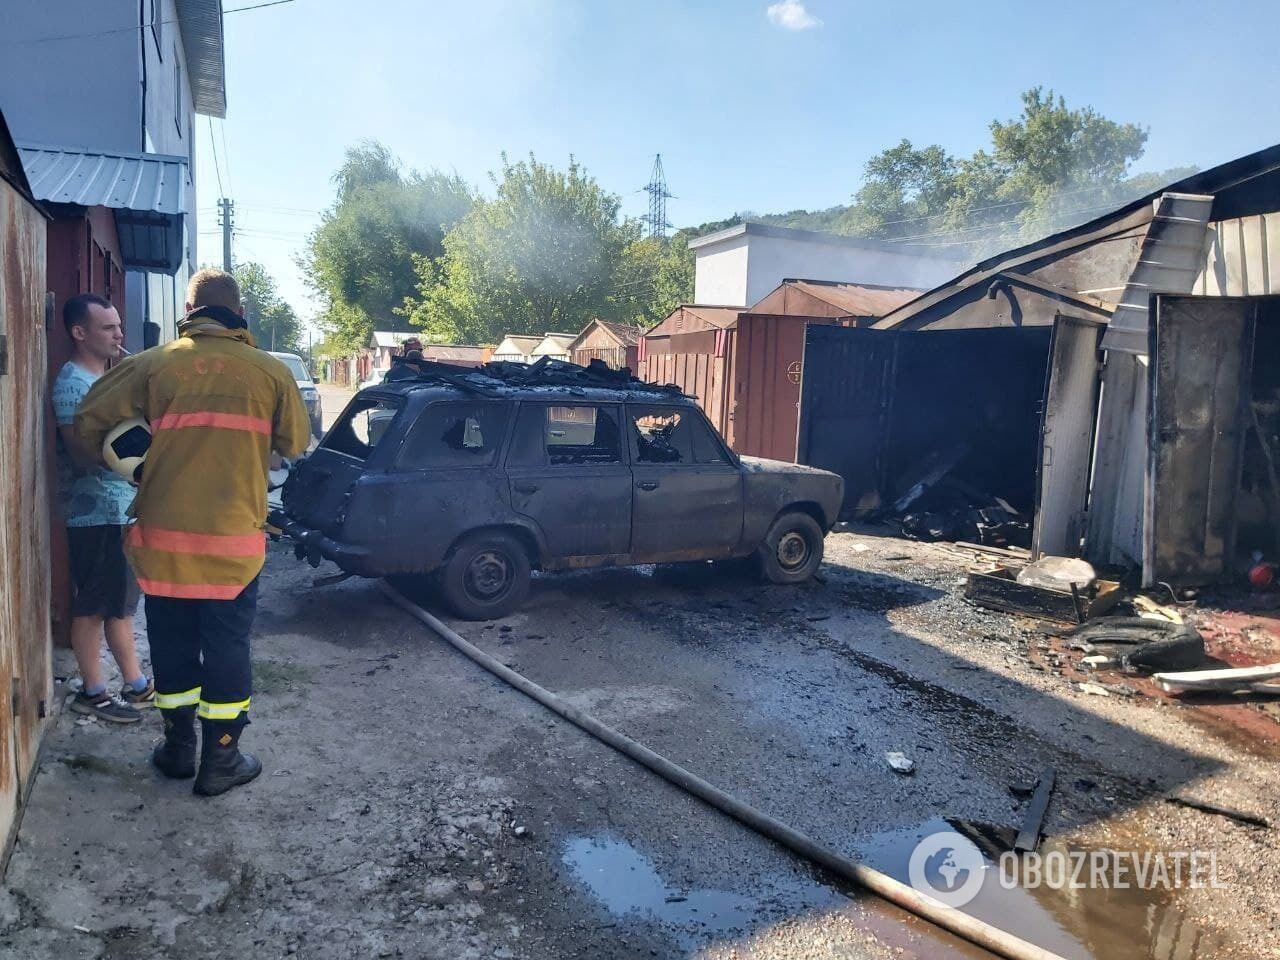 Огонь уничтожил два автомобиля.